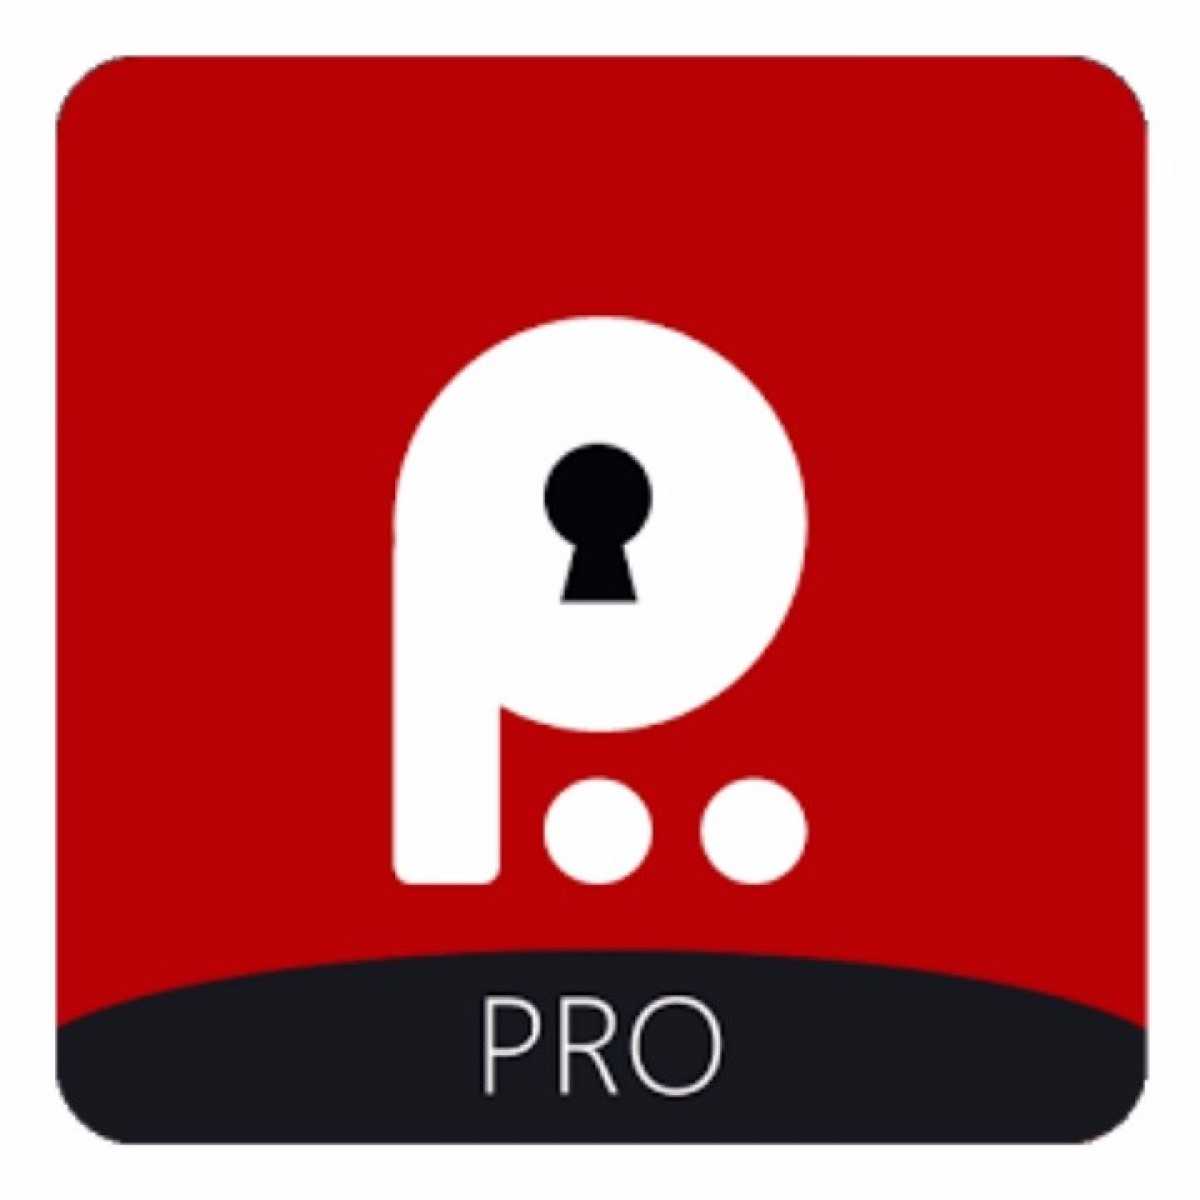 Personal Vault Pro v5.1-full (Paid) Apk